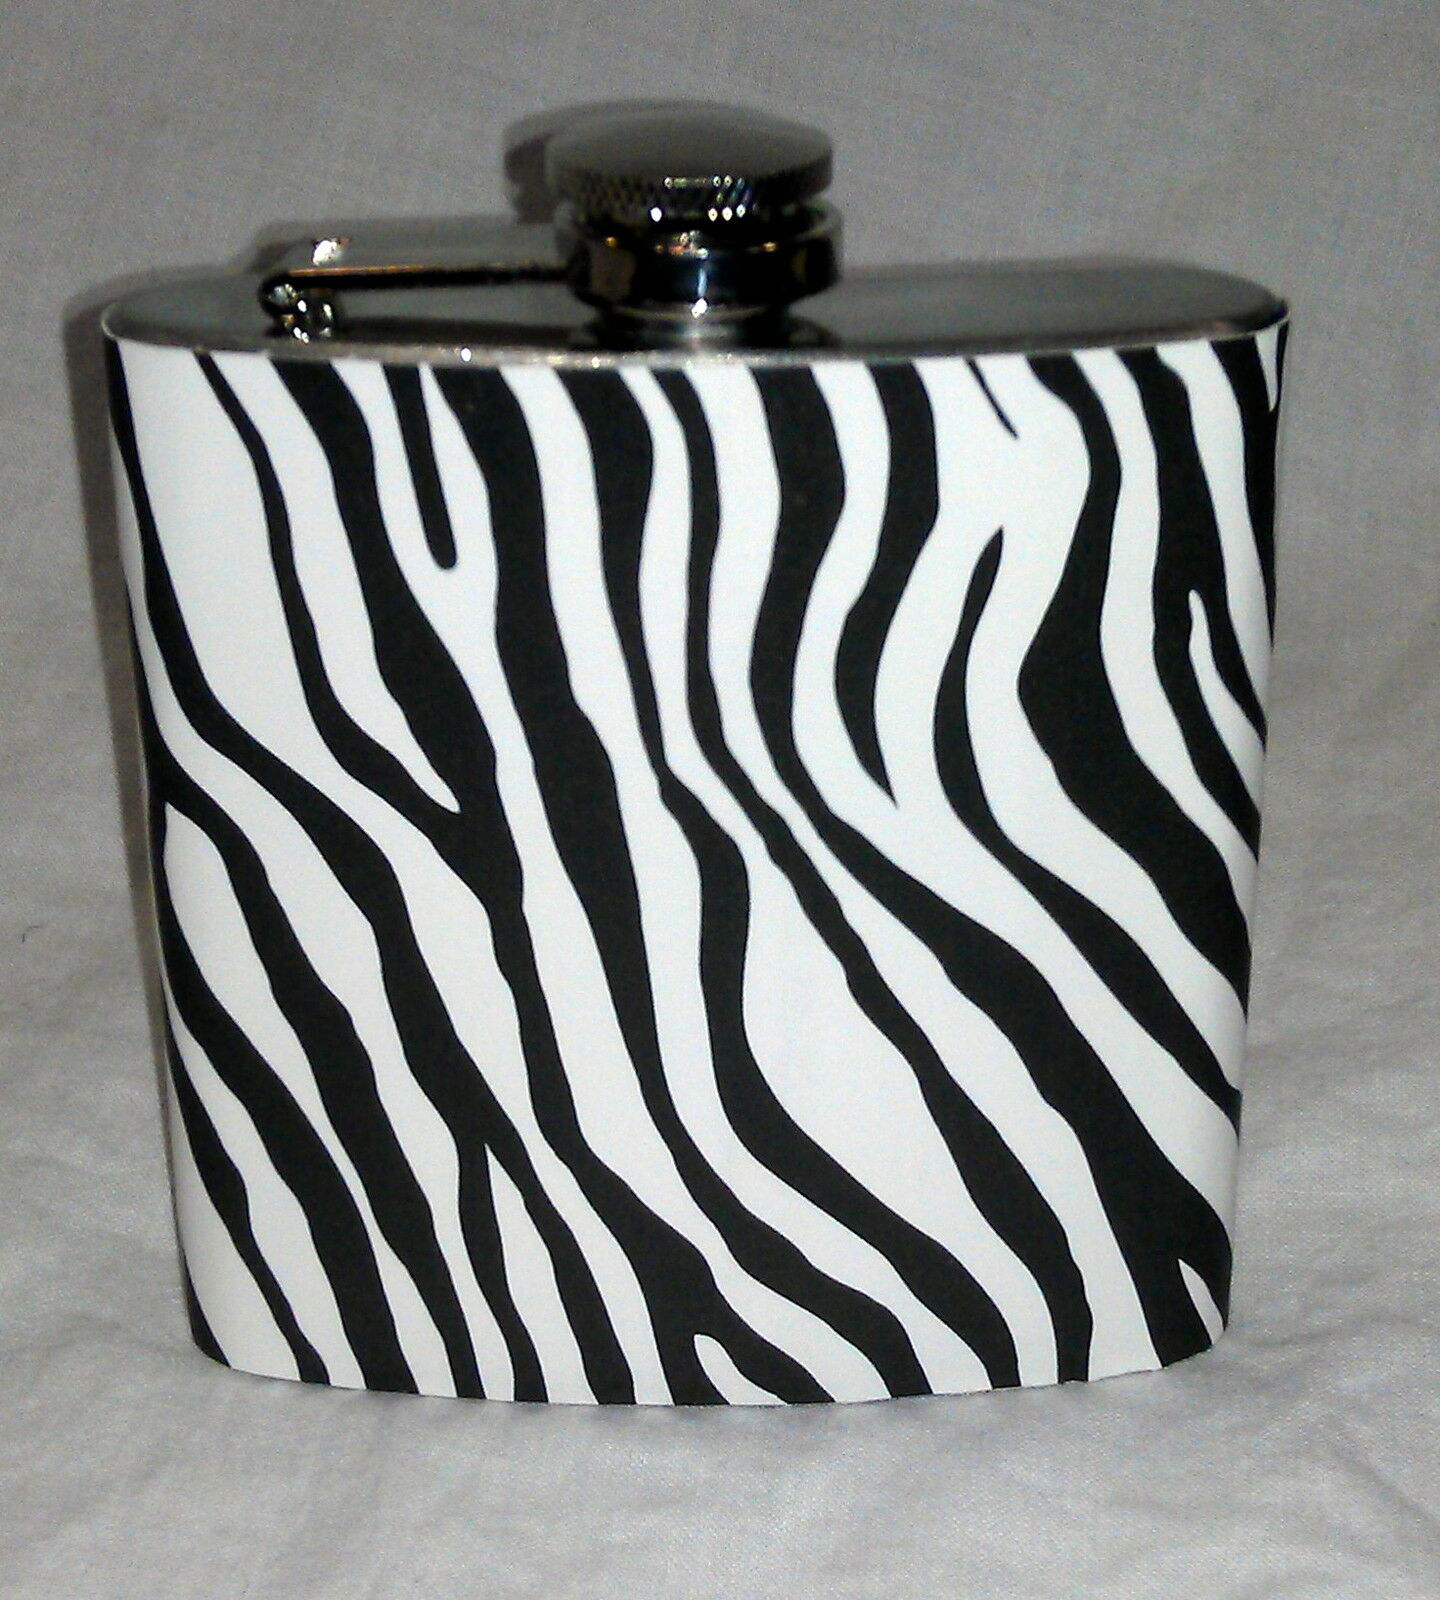 Fashionable Stainless Steel Zebra Print Flask - $12.99